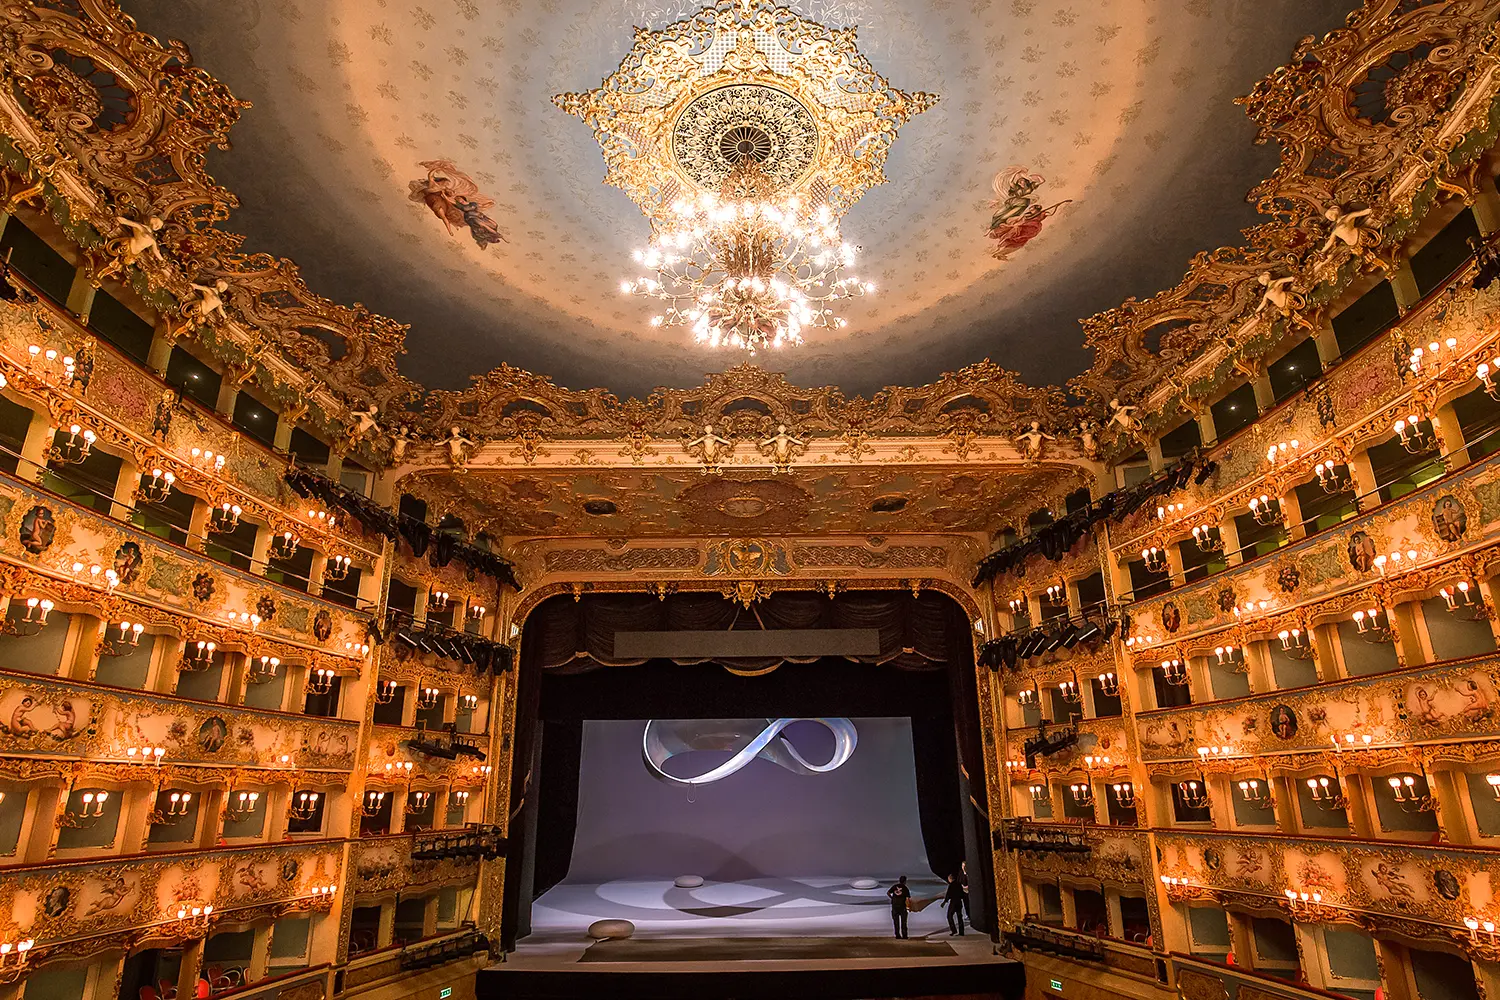 Interiors and architectural details of Teatro la Fenice, Venice